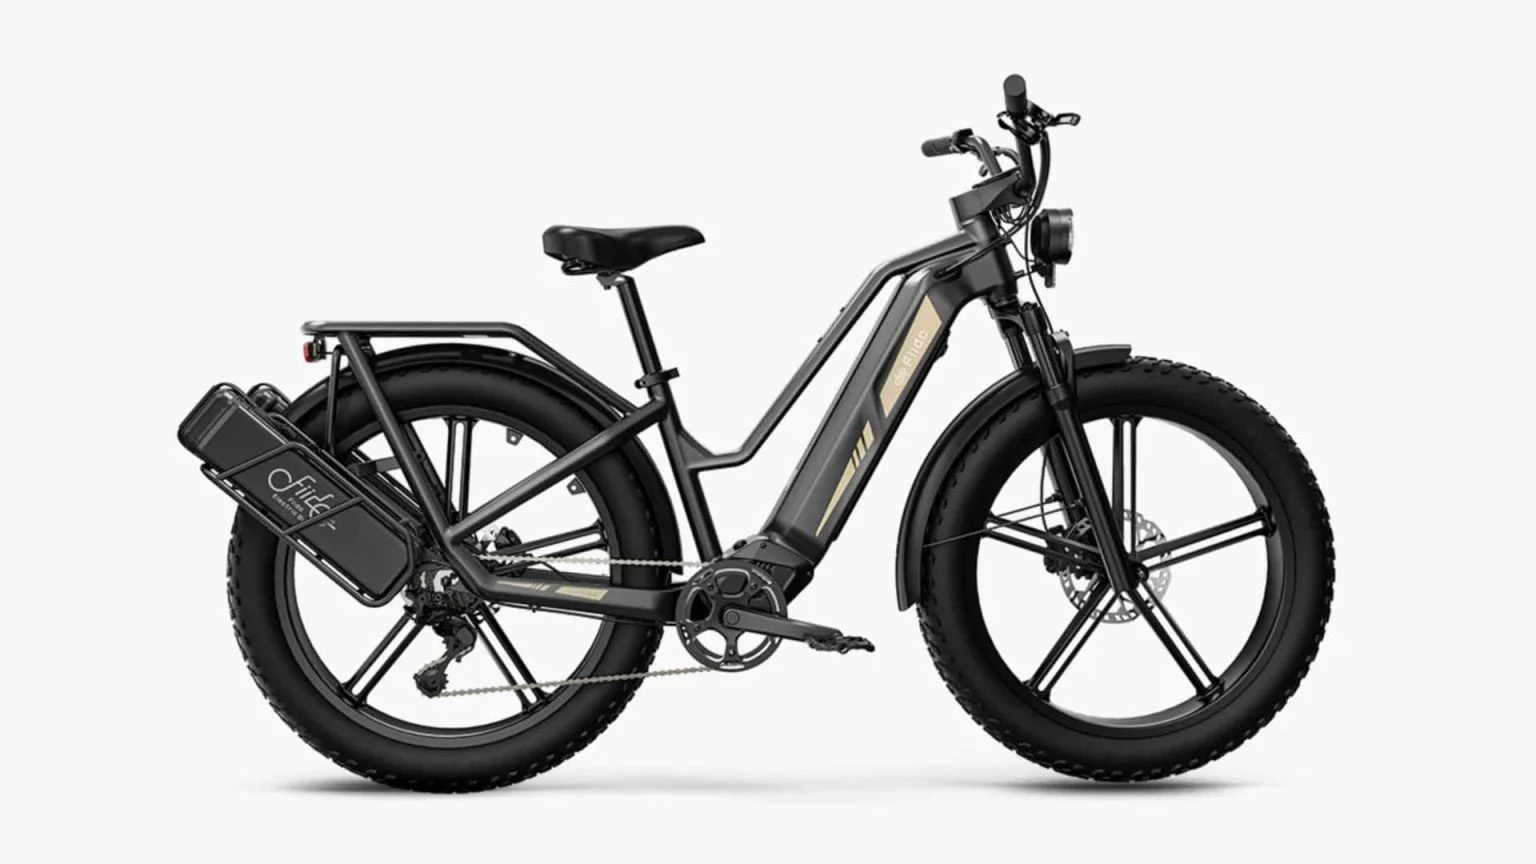 fiido-goes-big-on-range-with-new-titan-fat-tire-e-bike-1536x864%20copy_large.jpg